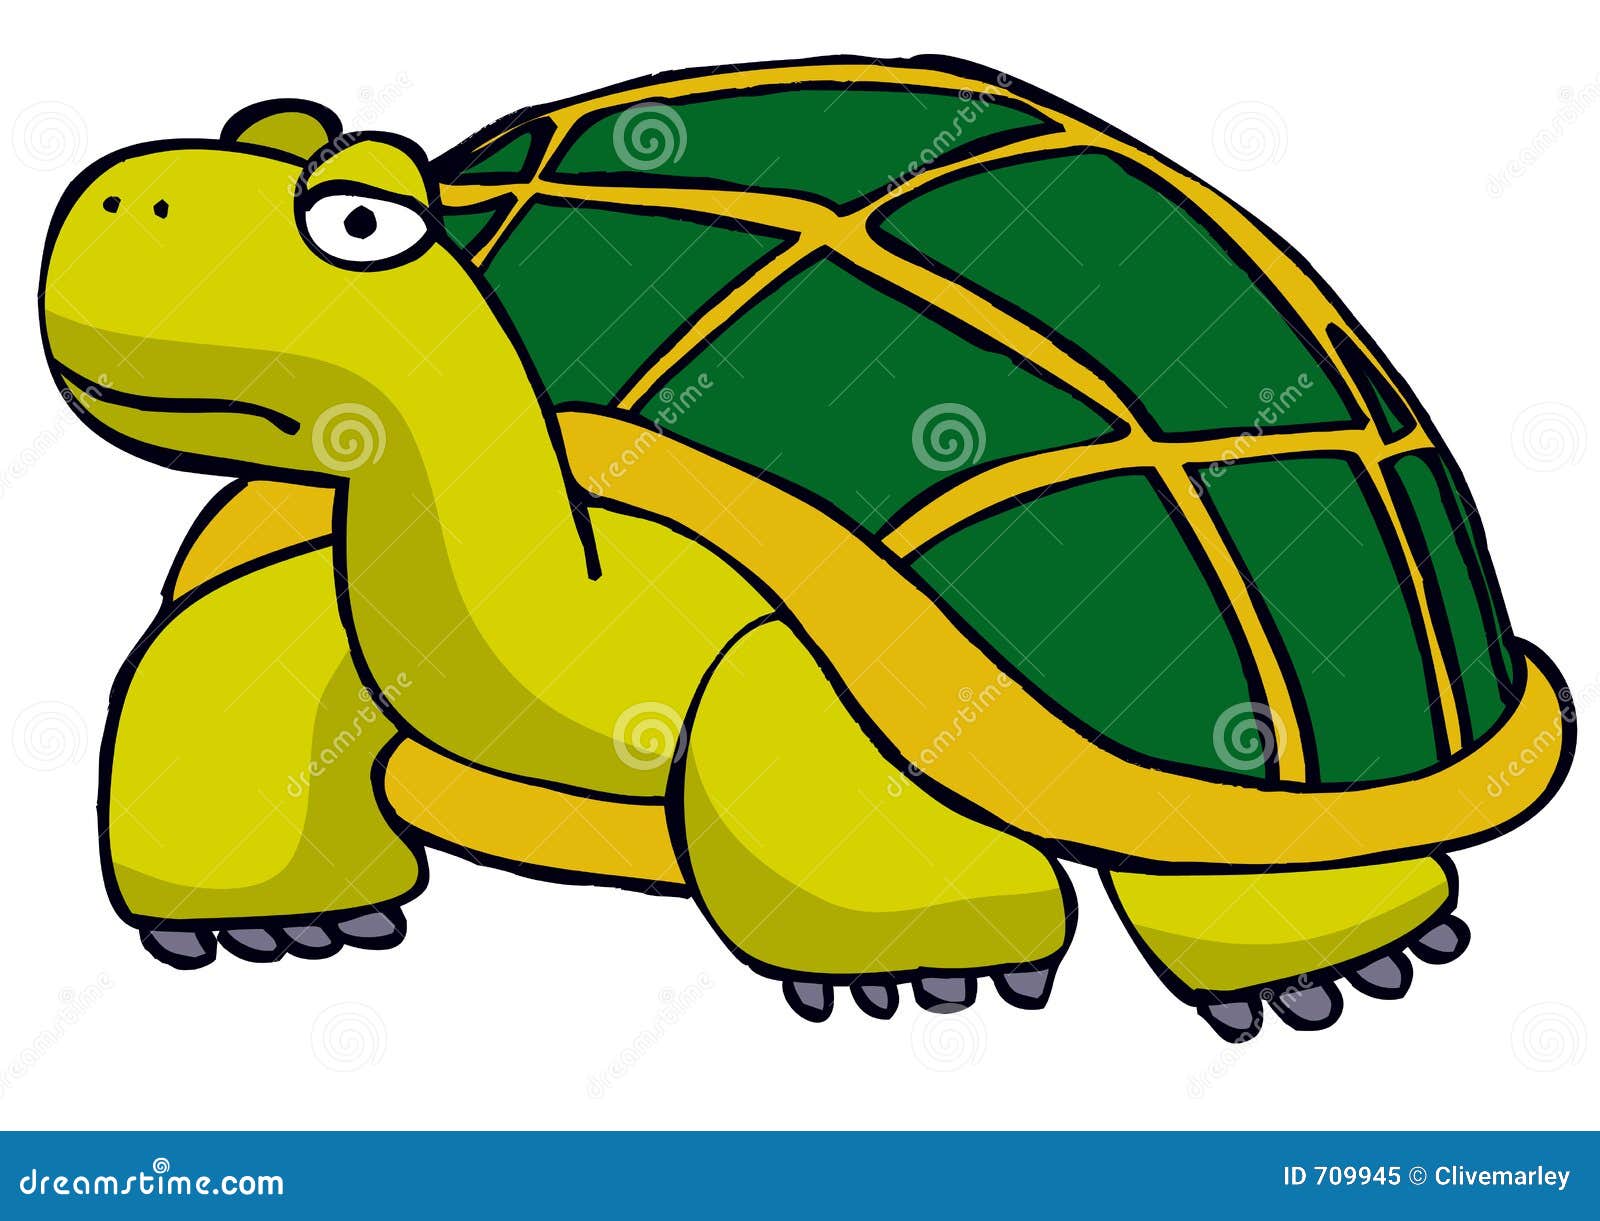 Tortoise stock illustration. Illustration of tortoise, slow - 709945